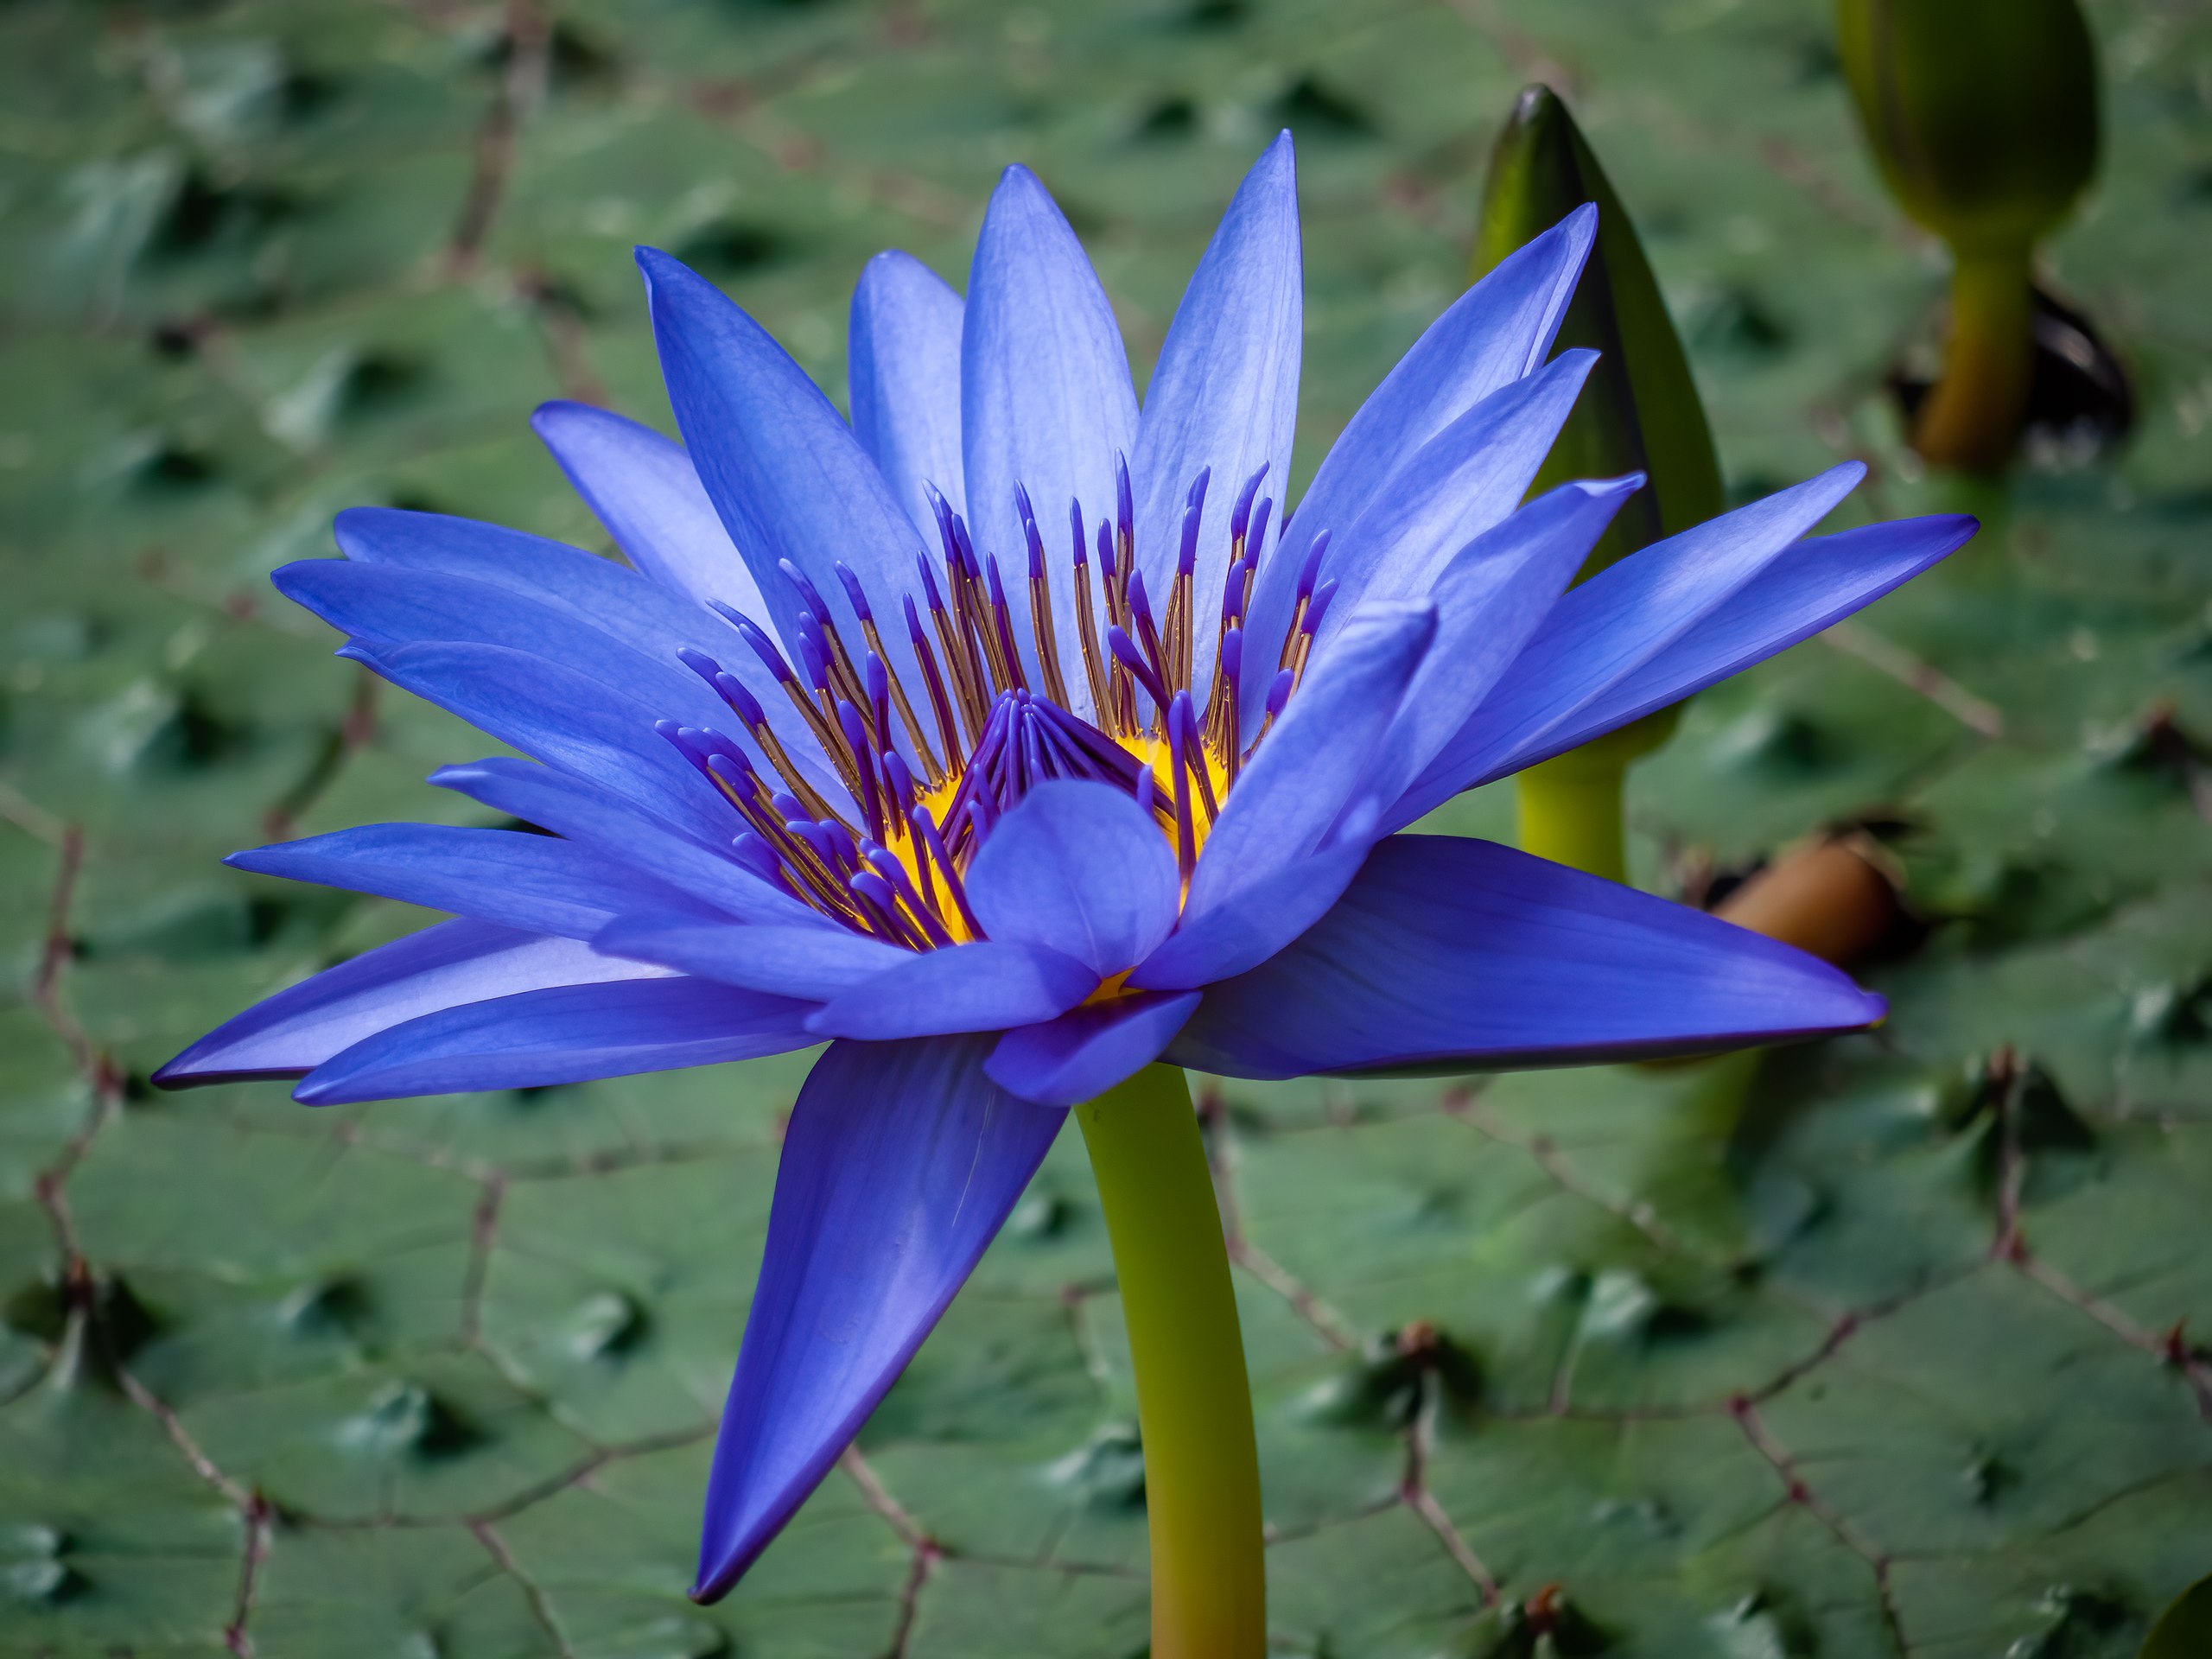 Blue Lotus by Ermell, via Wikimedia Creative Commons